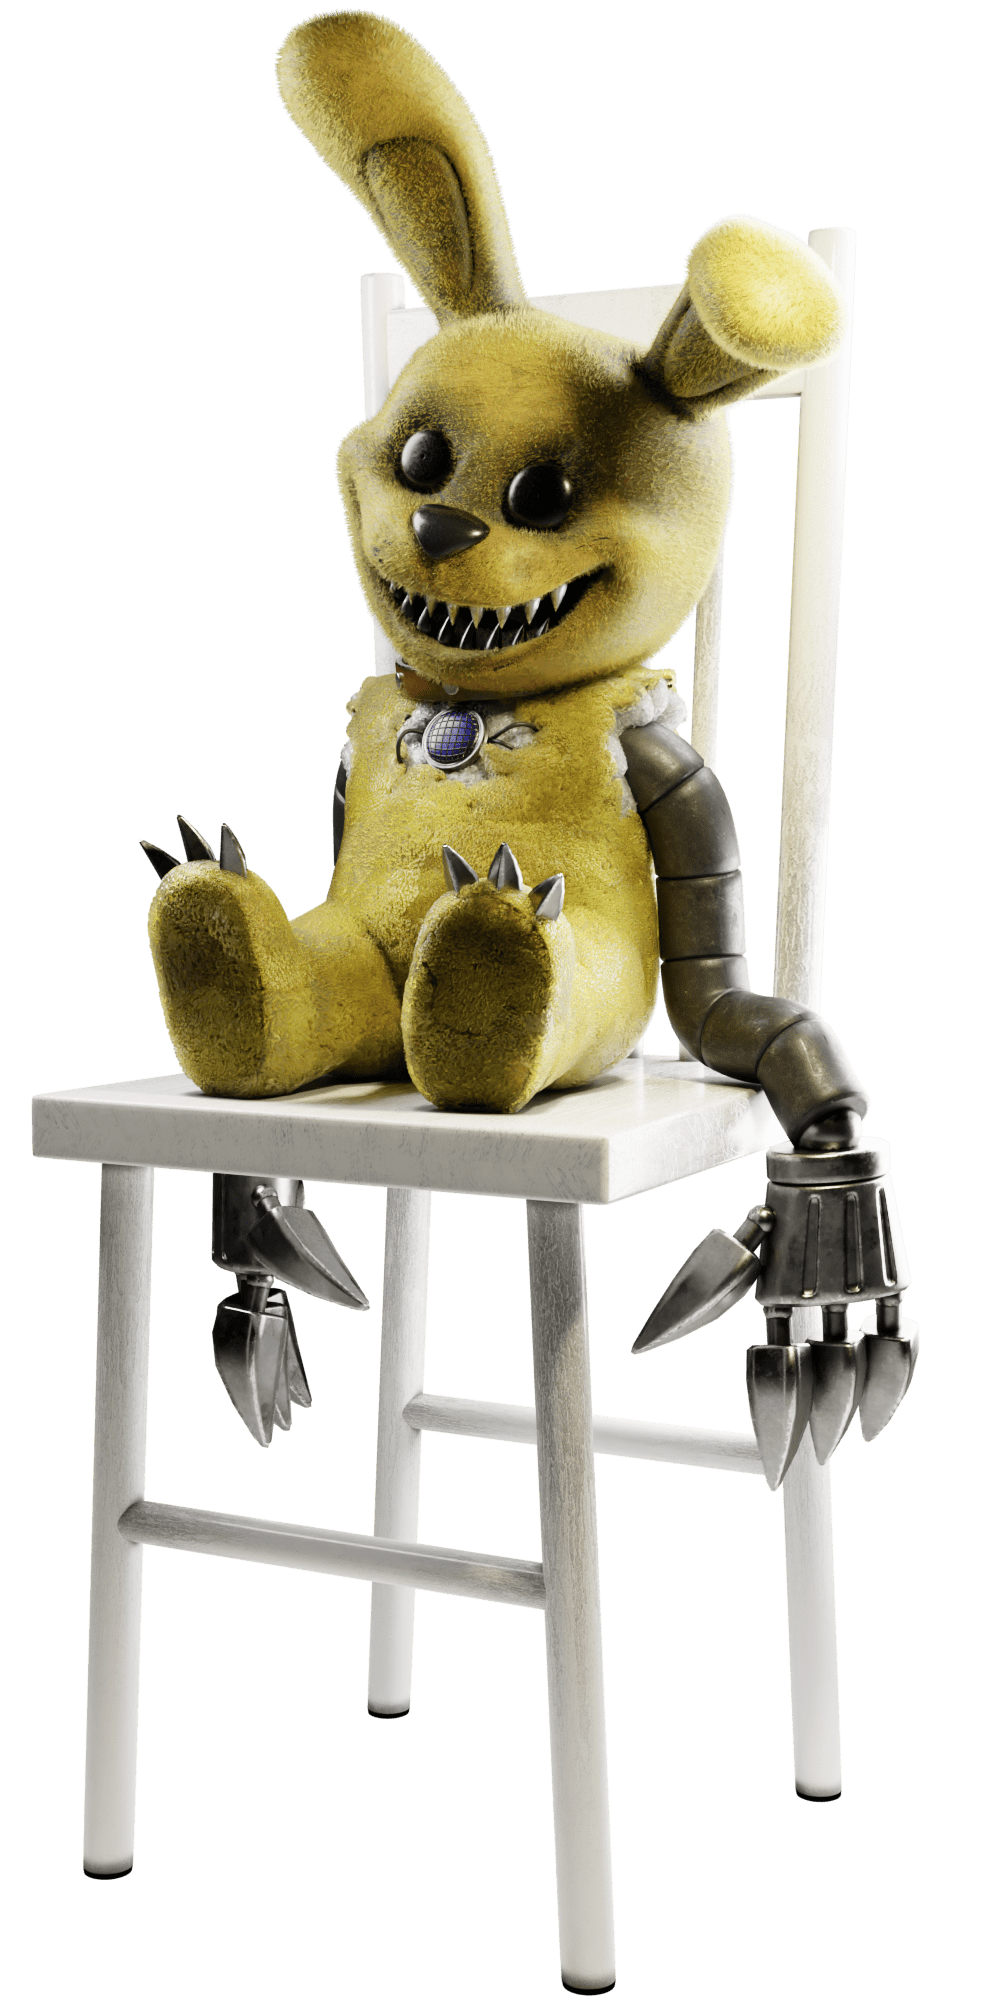 Plushtrap  Fnaf, Freddy's nightmares, Favorite character